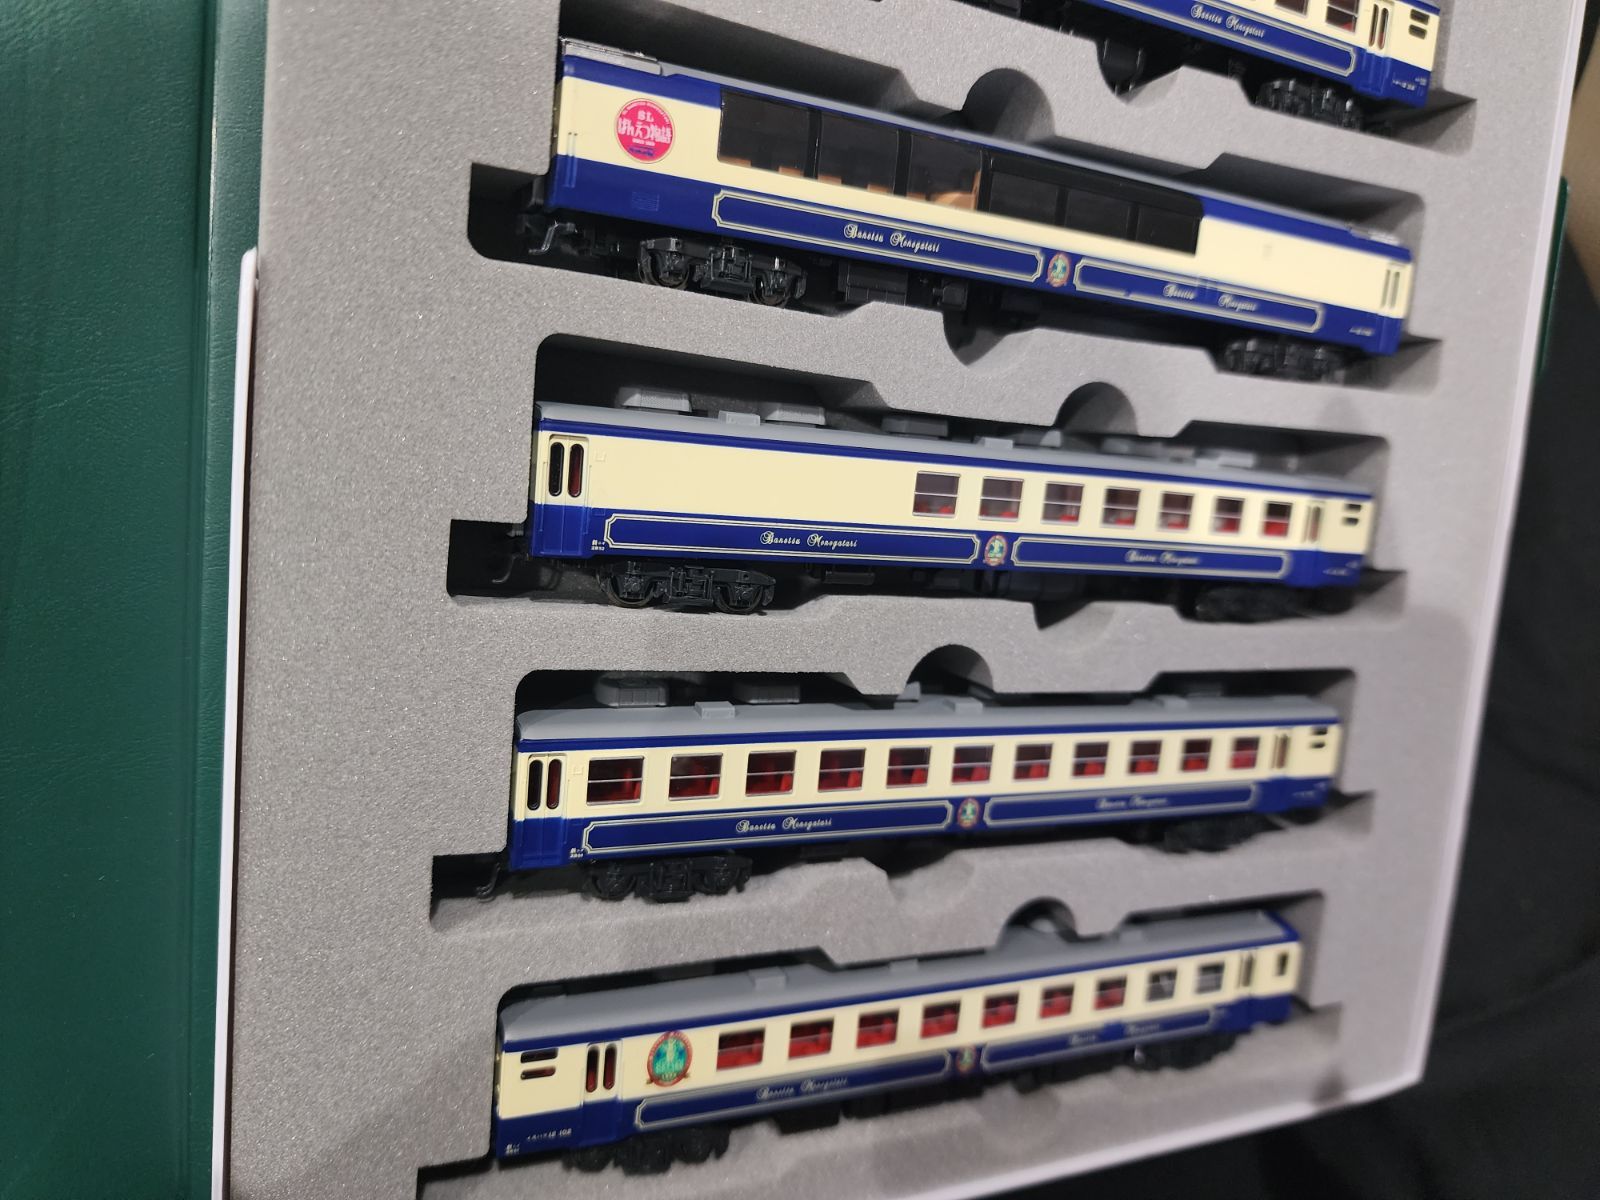 KATO 12系「SLばんえつ物語号」新塗装7両セット 10-270 鉄道模型・N 